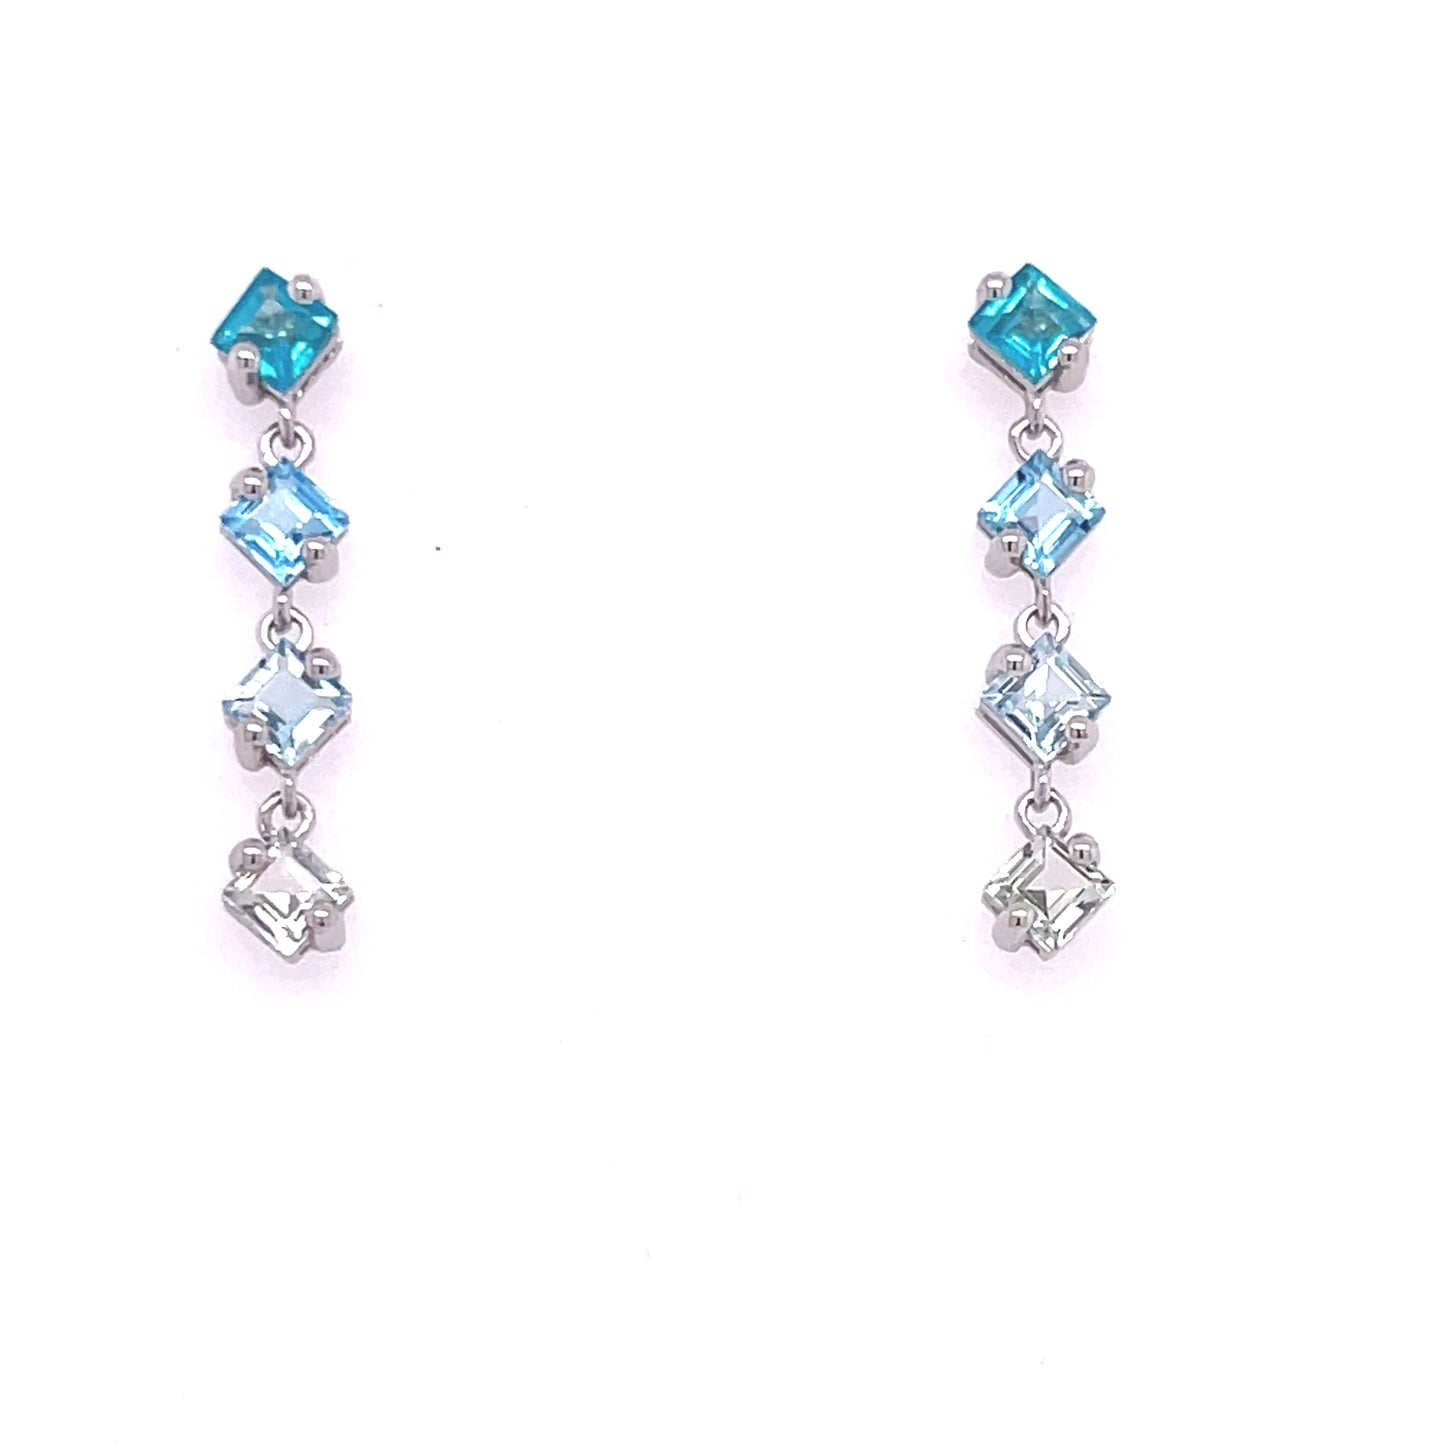 Blue Gemstone Mix Dangle Earrings - Pair